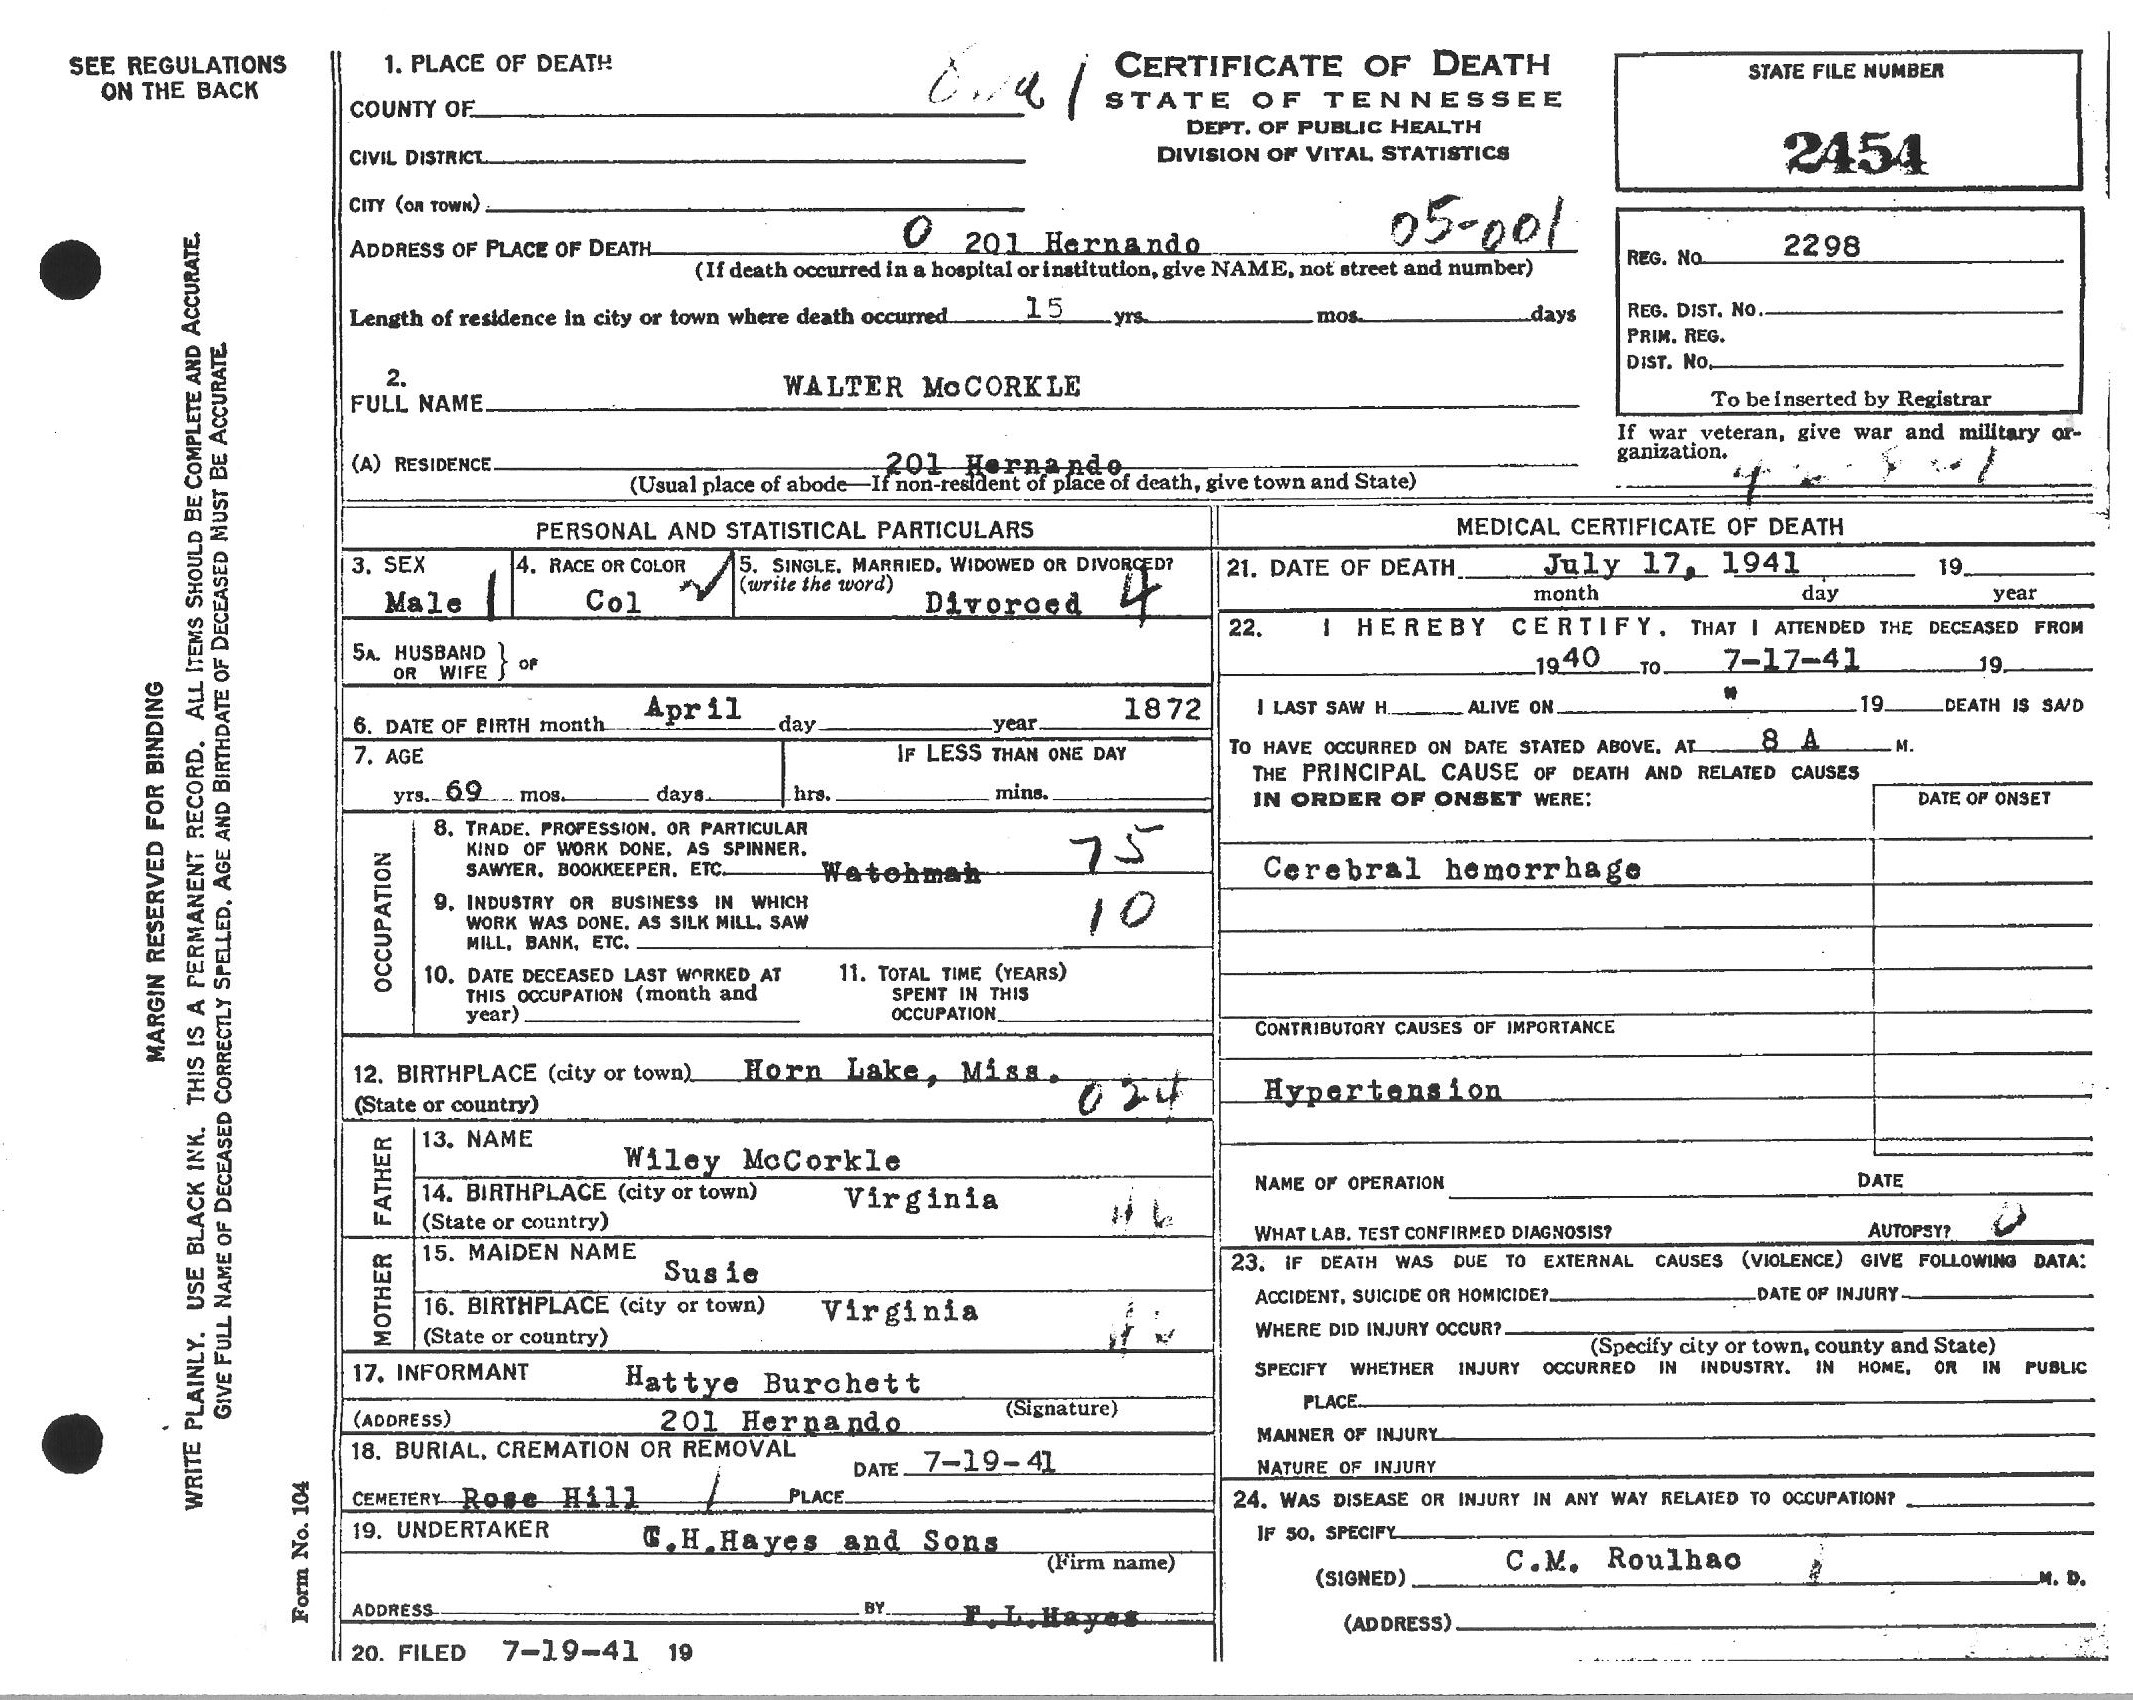 Walter McCorkle's Death Certificate